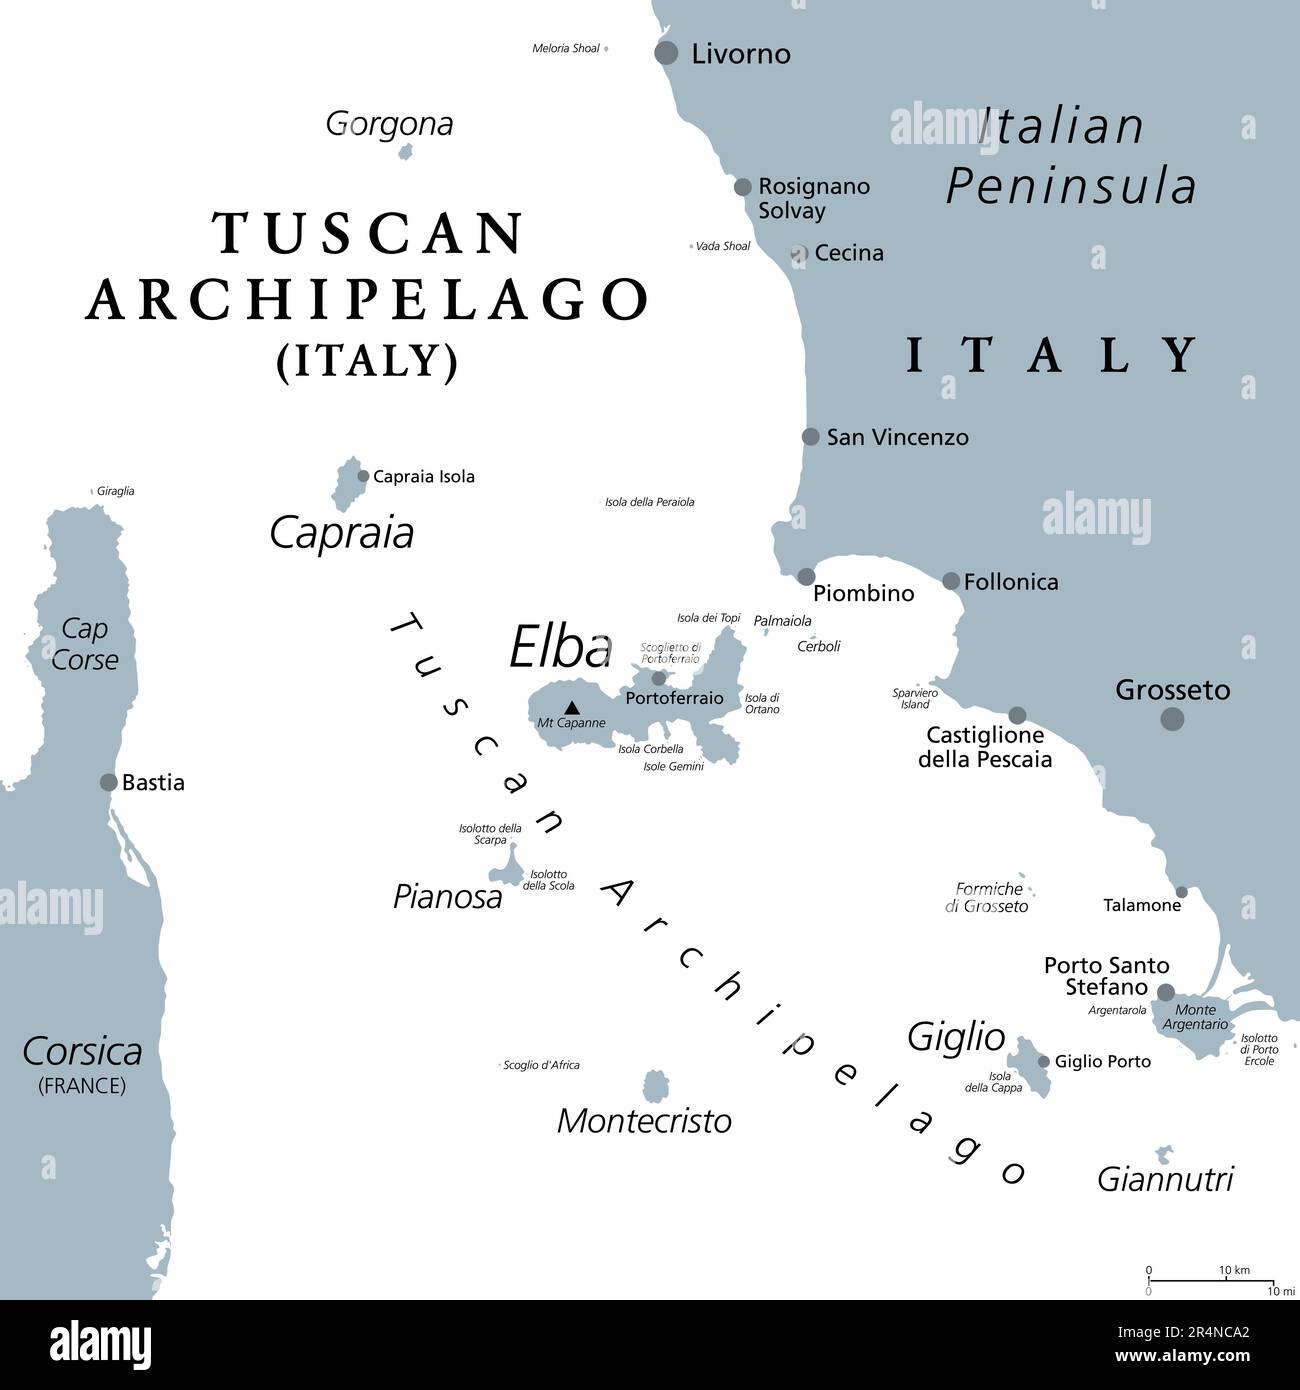 Tuscan Archipelago, Italy, gray political map. Island chain between Ligurian and Tyrrhenian Sea, between Corsica and Italian Peninsula. Stock Photo